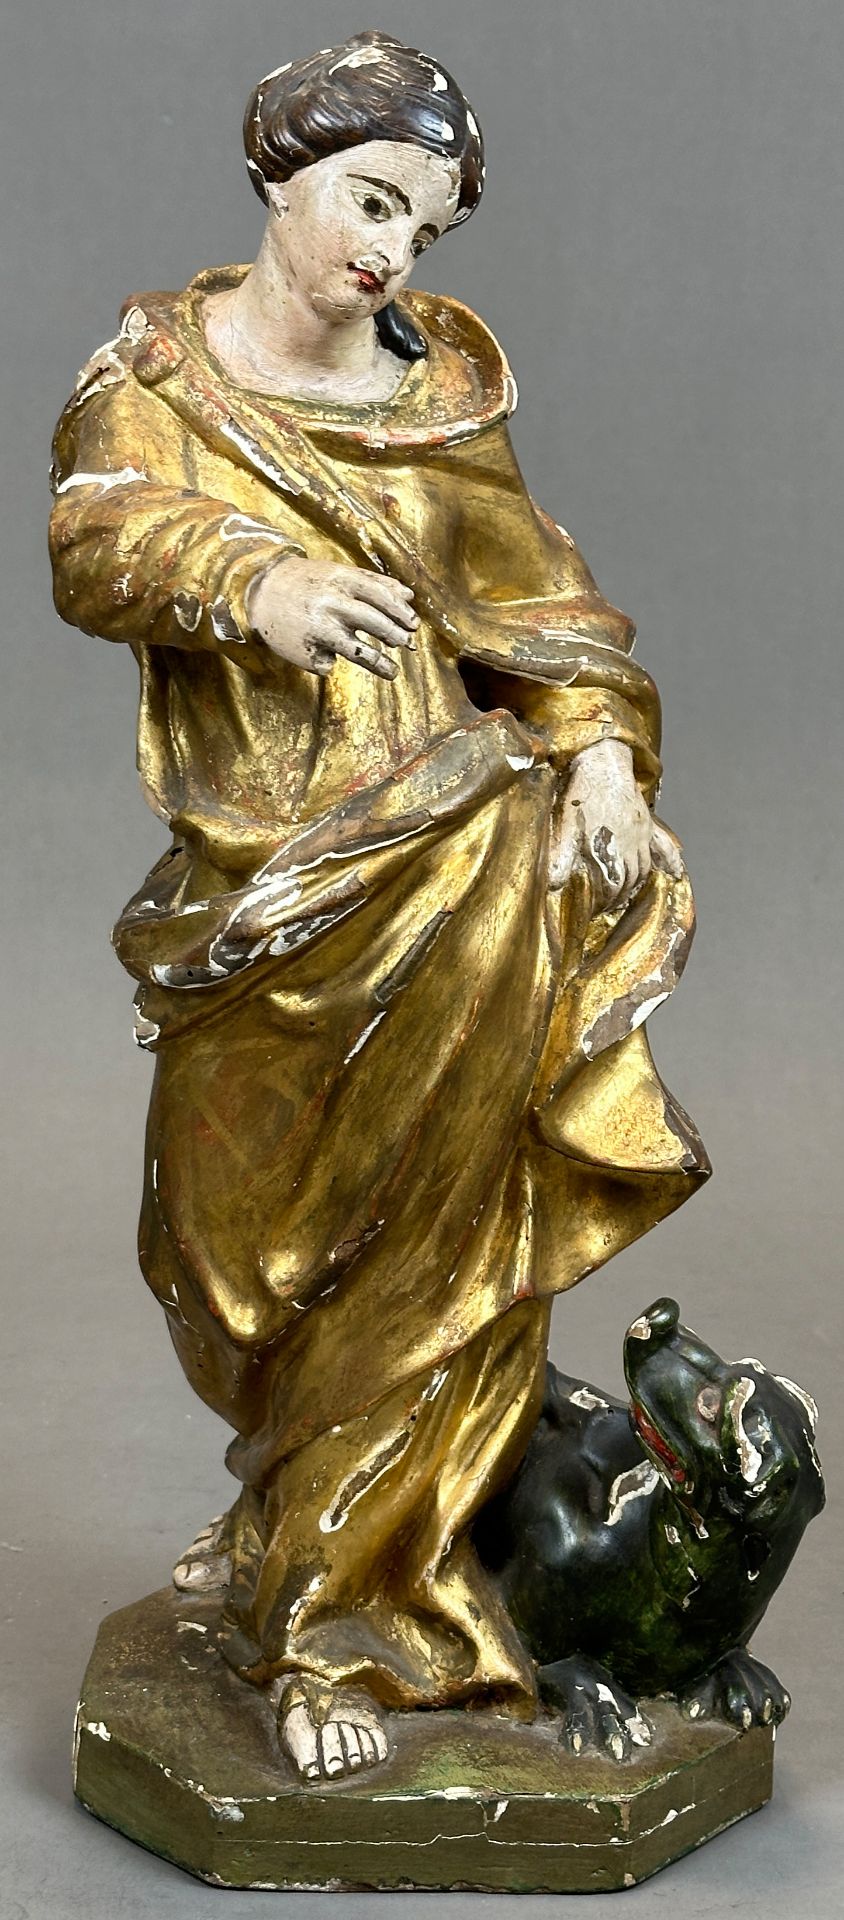 Holzfigur. Maria Immakulata mit Drache. 18. Jahrhundert. Süddeutschland.